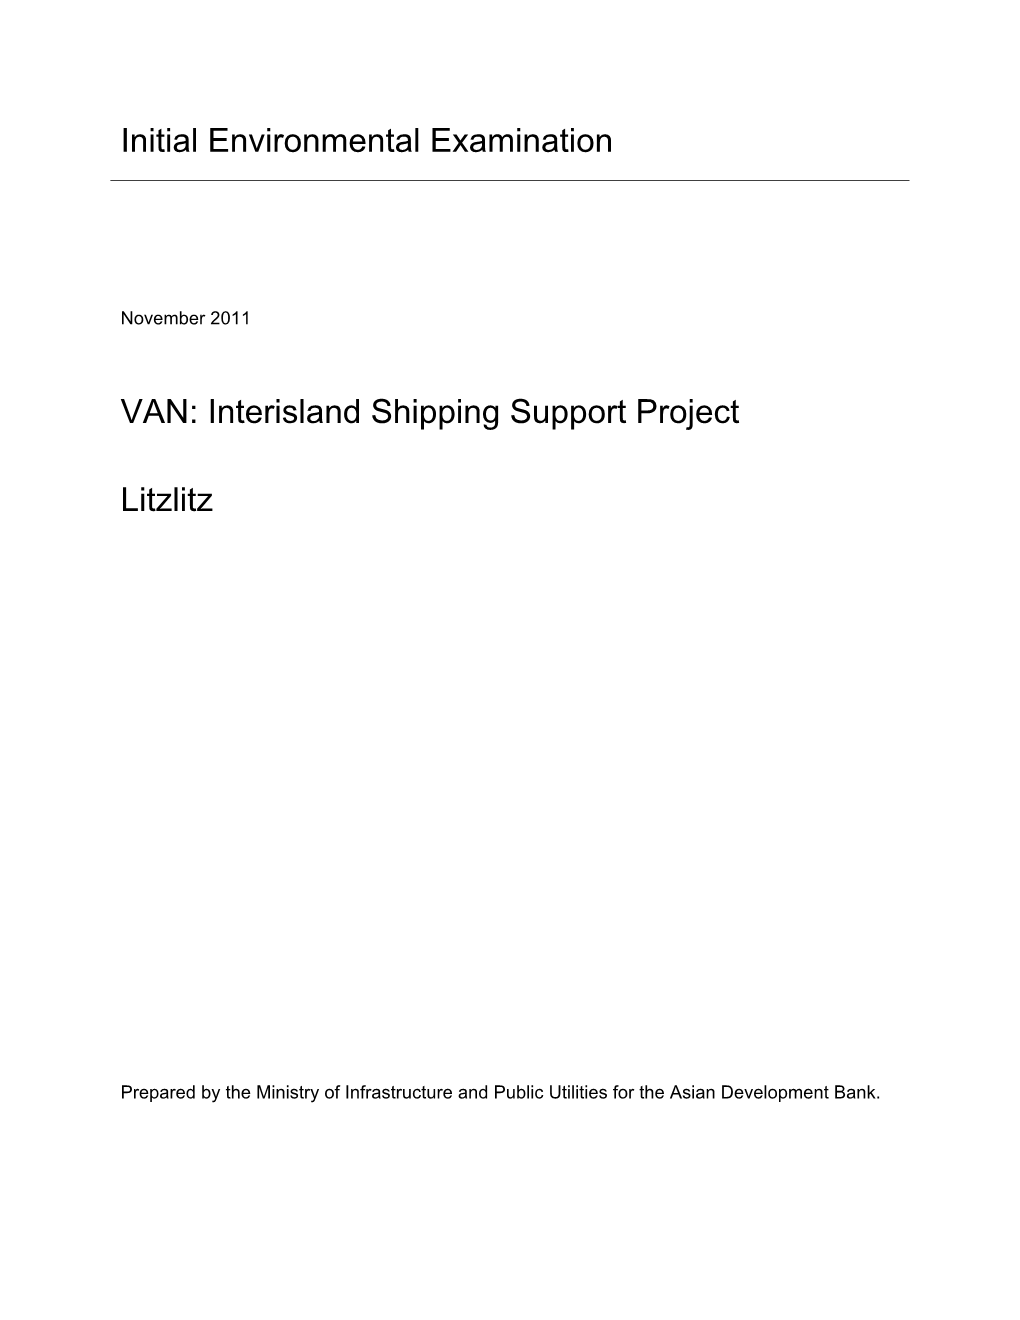 IEE: Vanuatu: Interisland Shipping Support Project